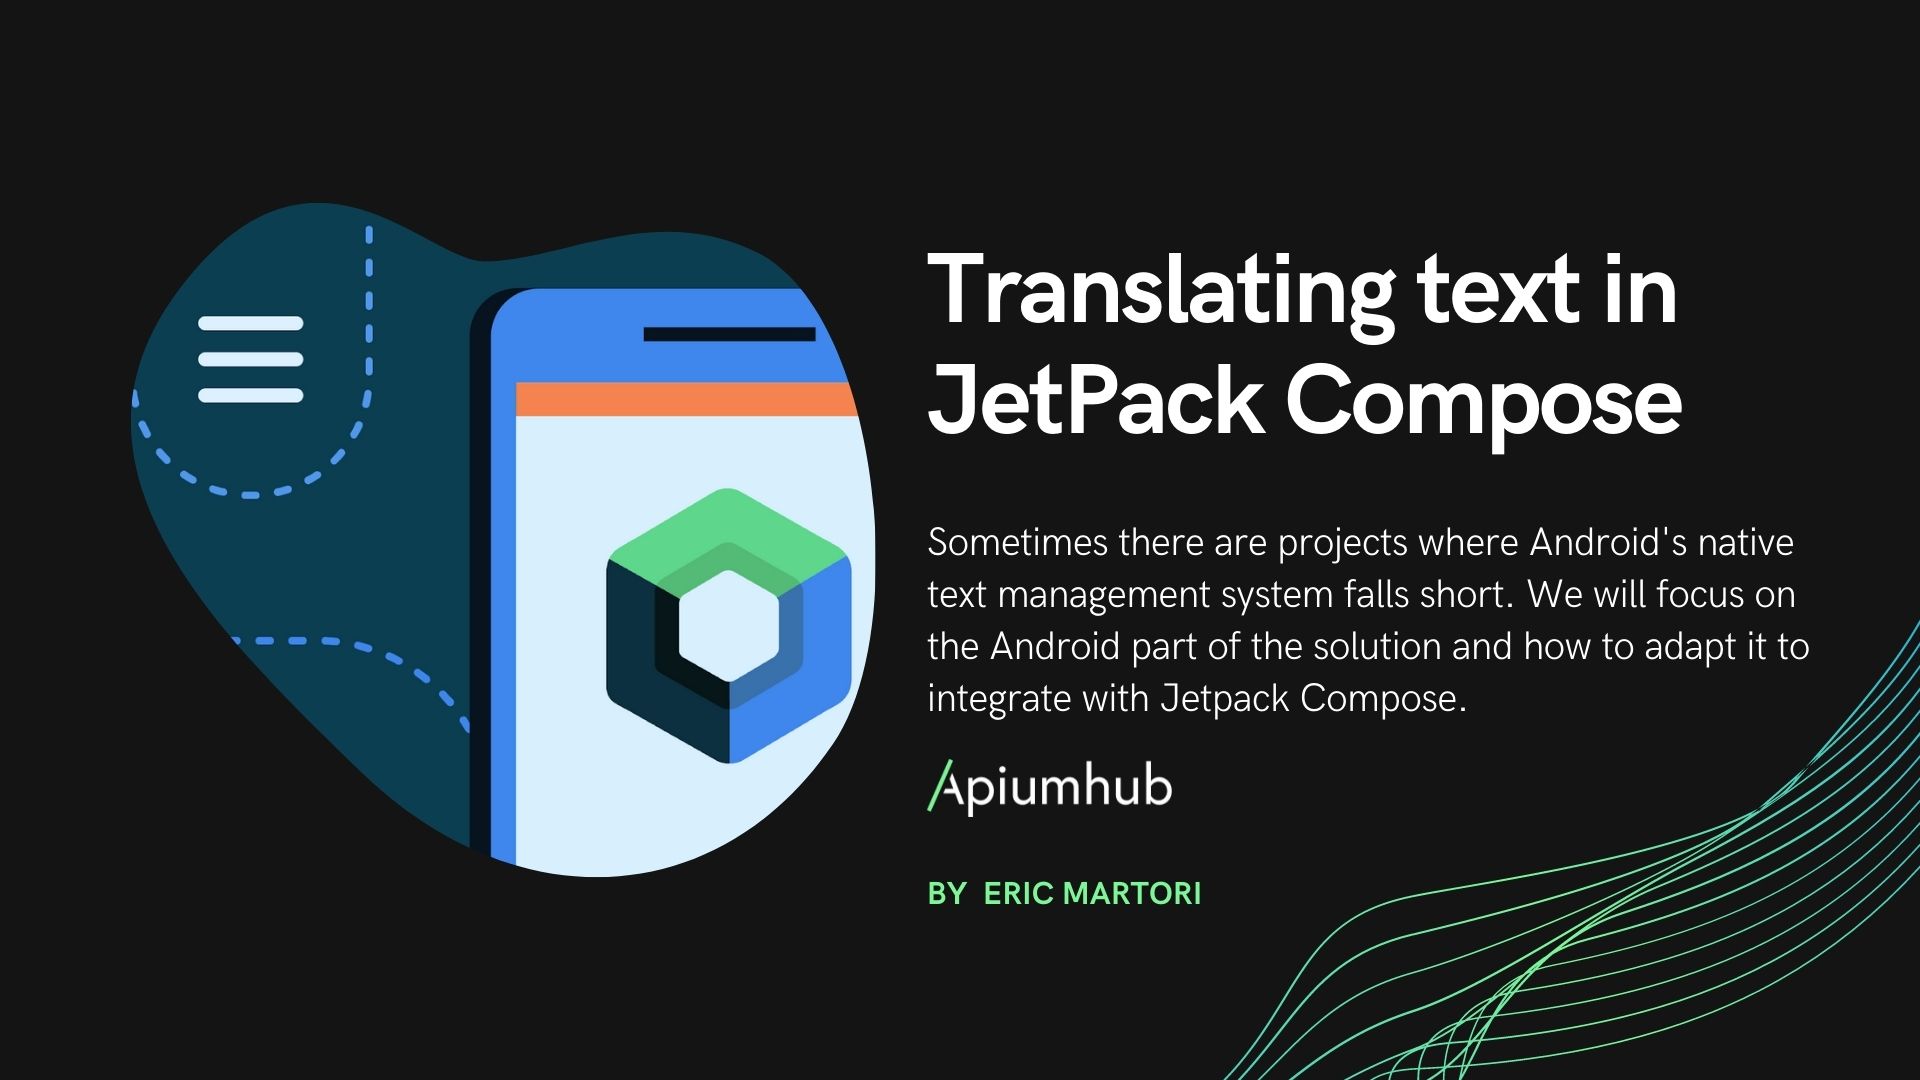 Translating text in JetPack Compose